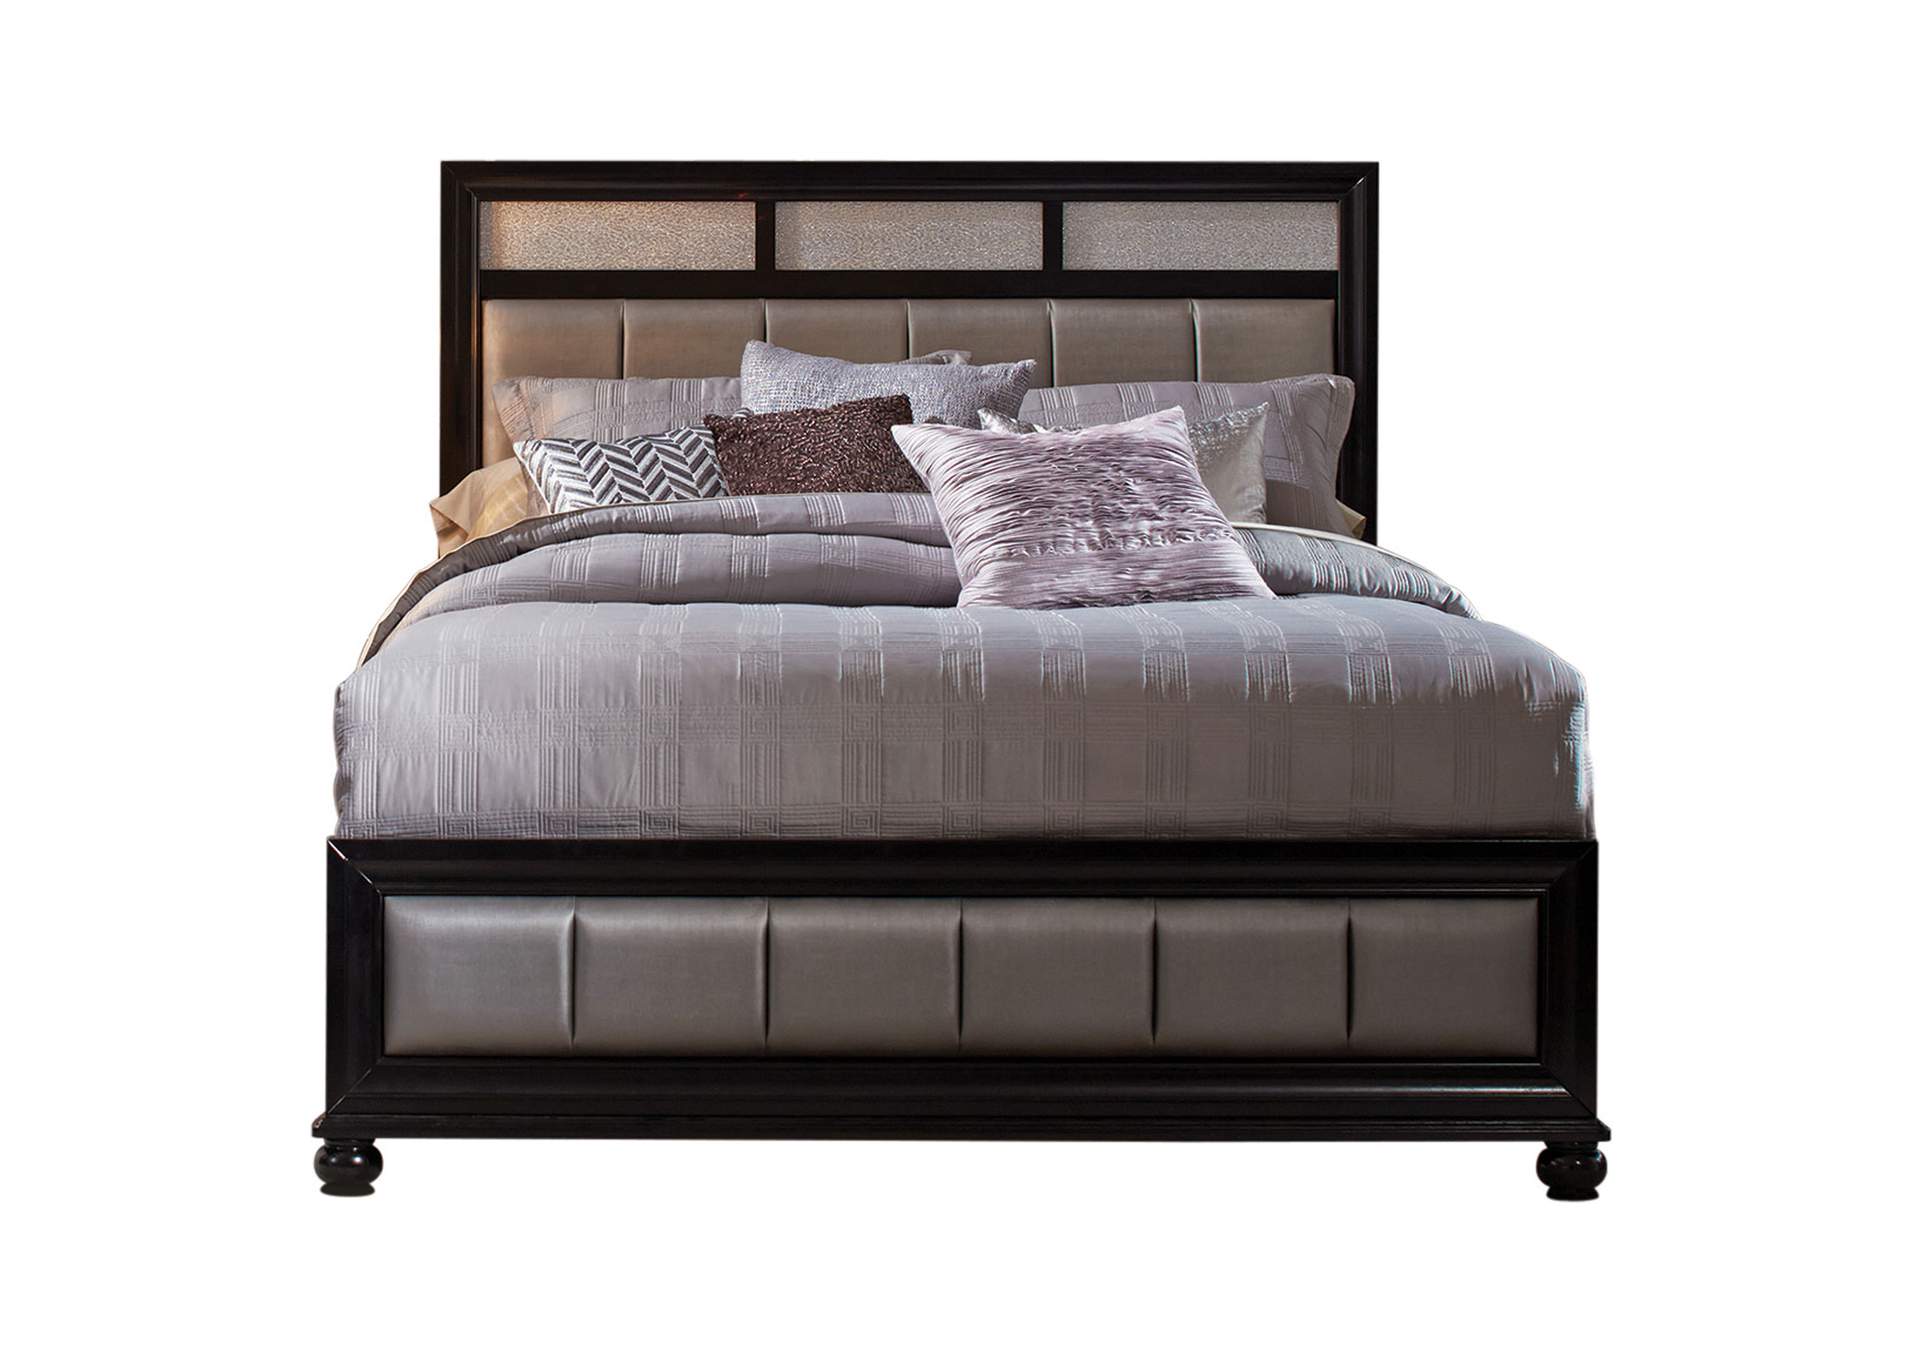 Barzini California King Upholstered Bed Black and Grey,Coaster Furniture